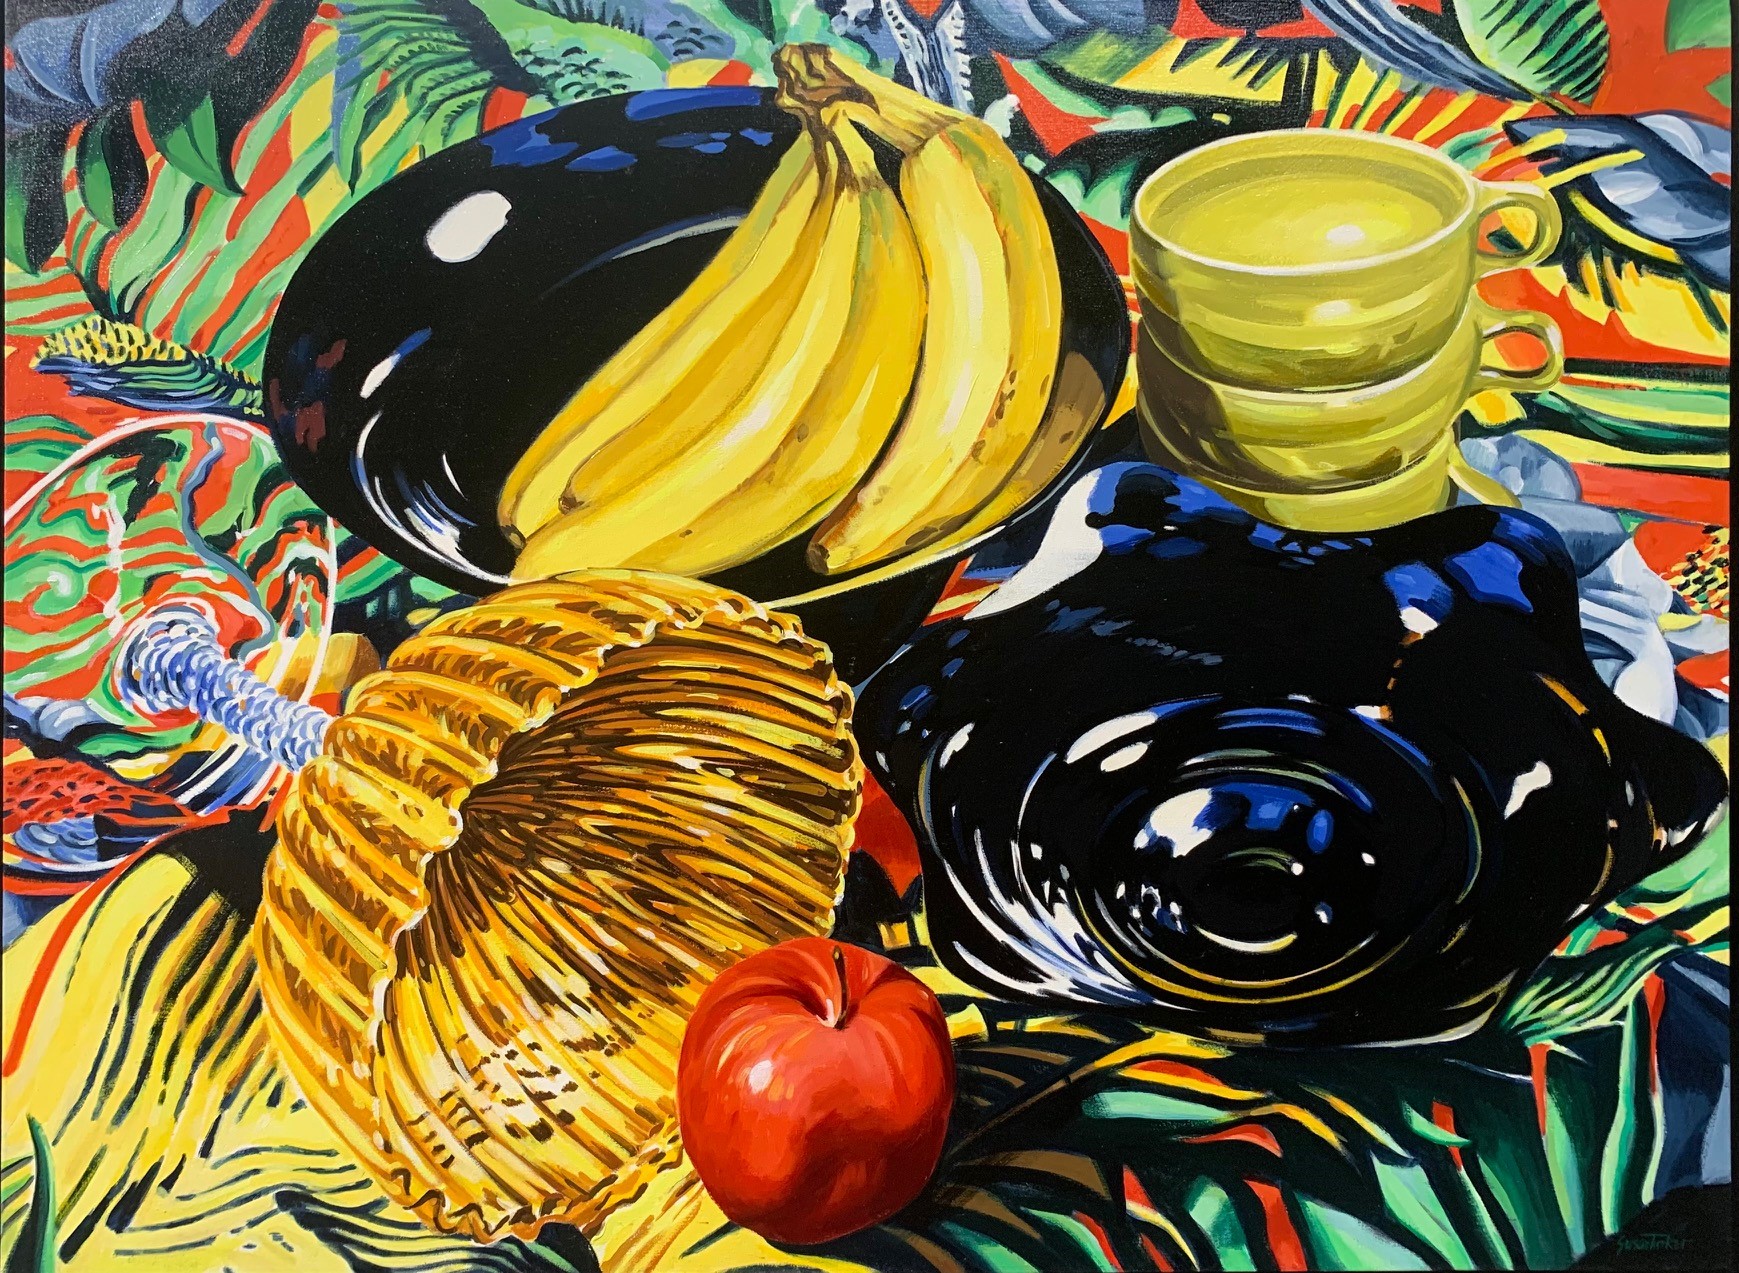 Susan Tinker, “Tropical Still Life”, oil on canvas